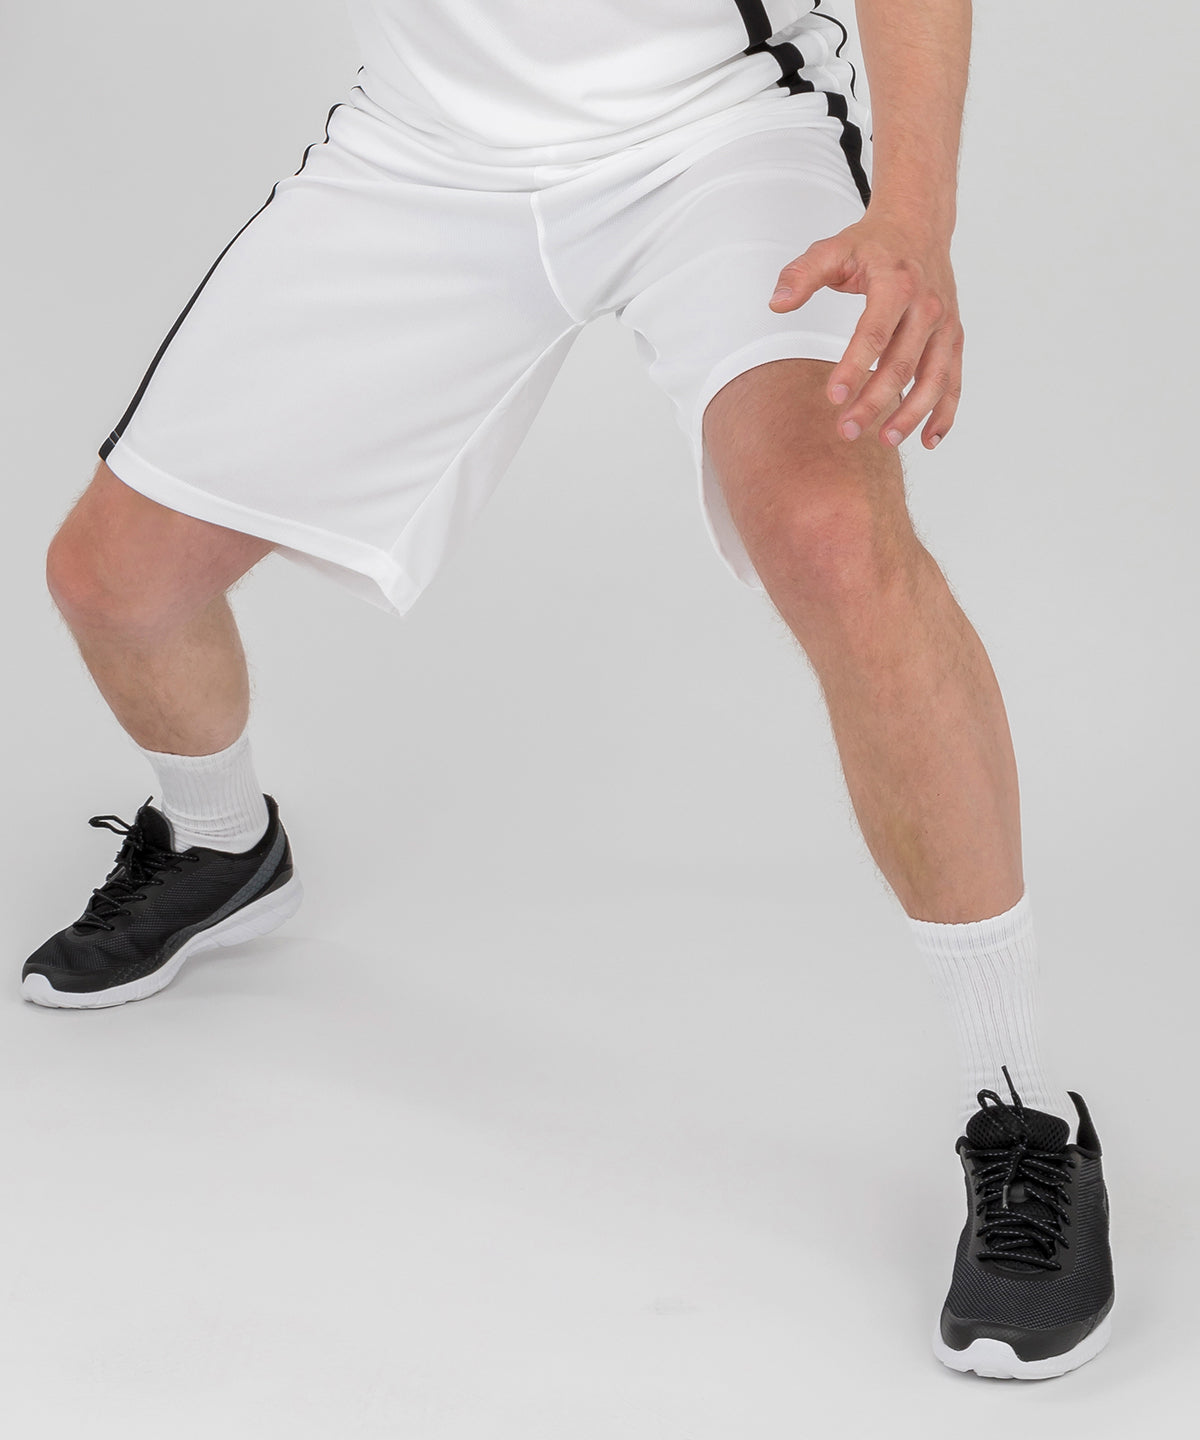 Spiro Basketball Quick-Dry Shorts